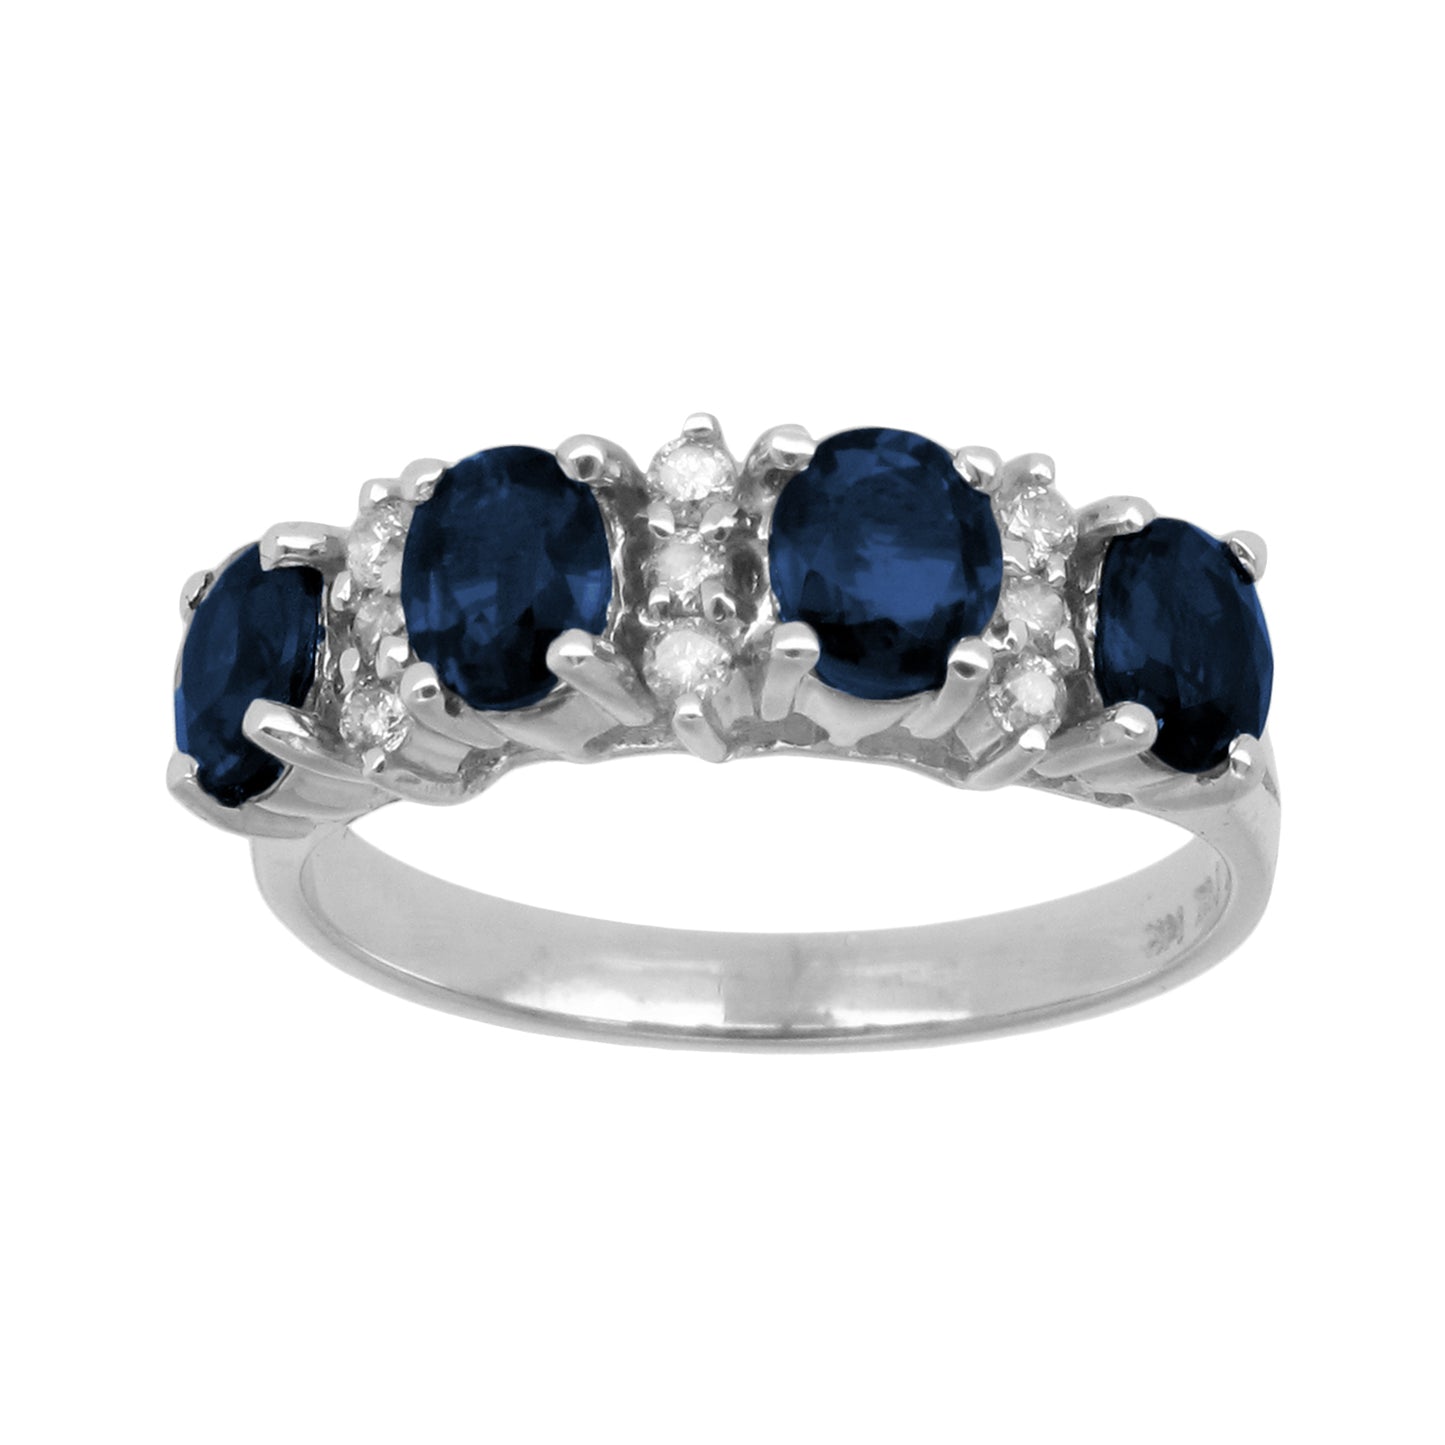 2.0ct Blue Sapphire & Diamond Ring in 14k White Gold